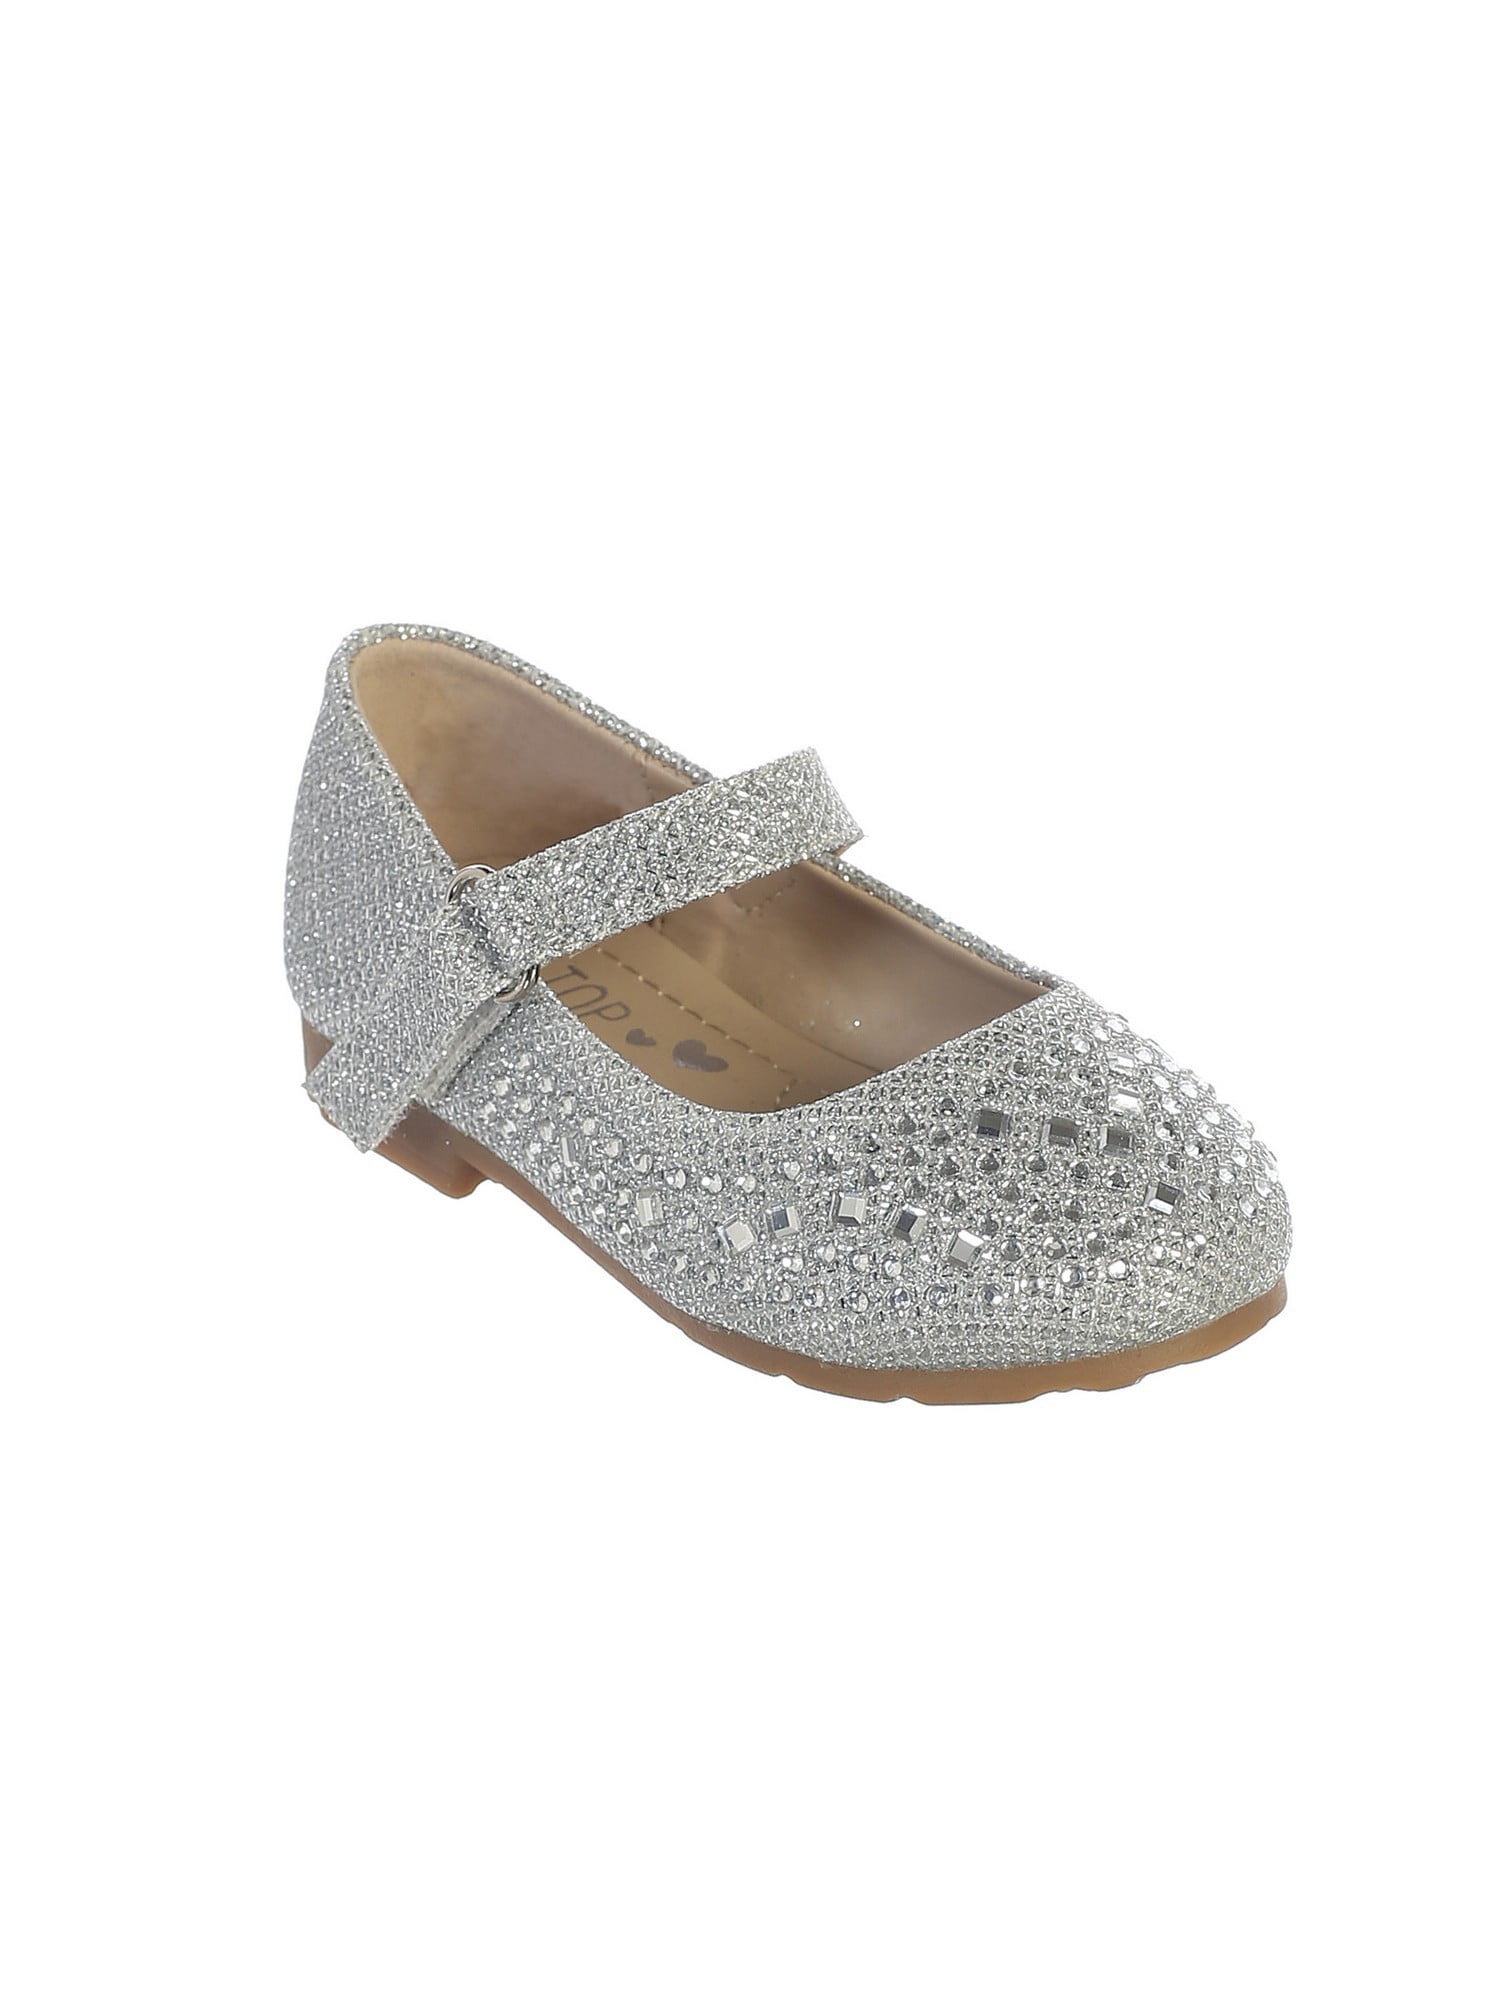 girls silver dress shoes